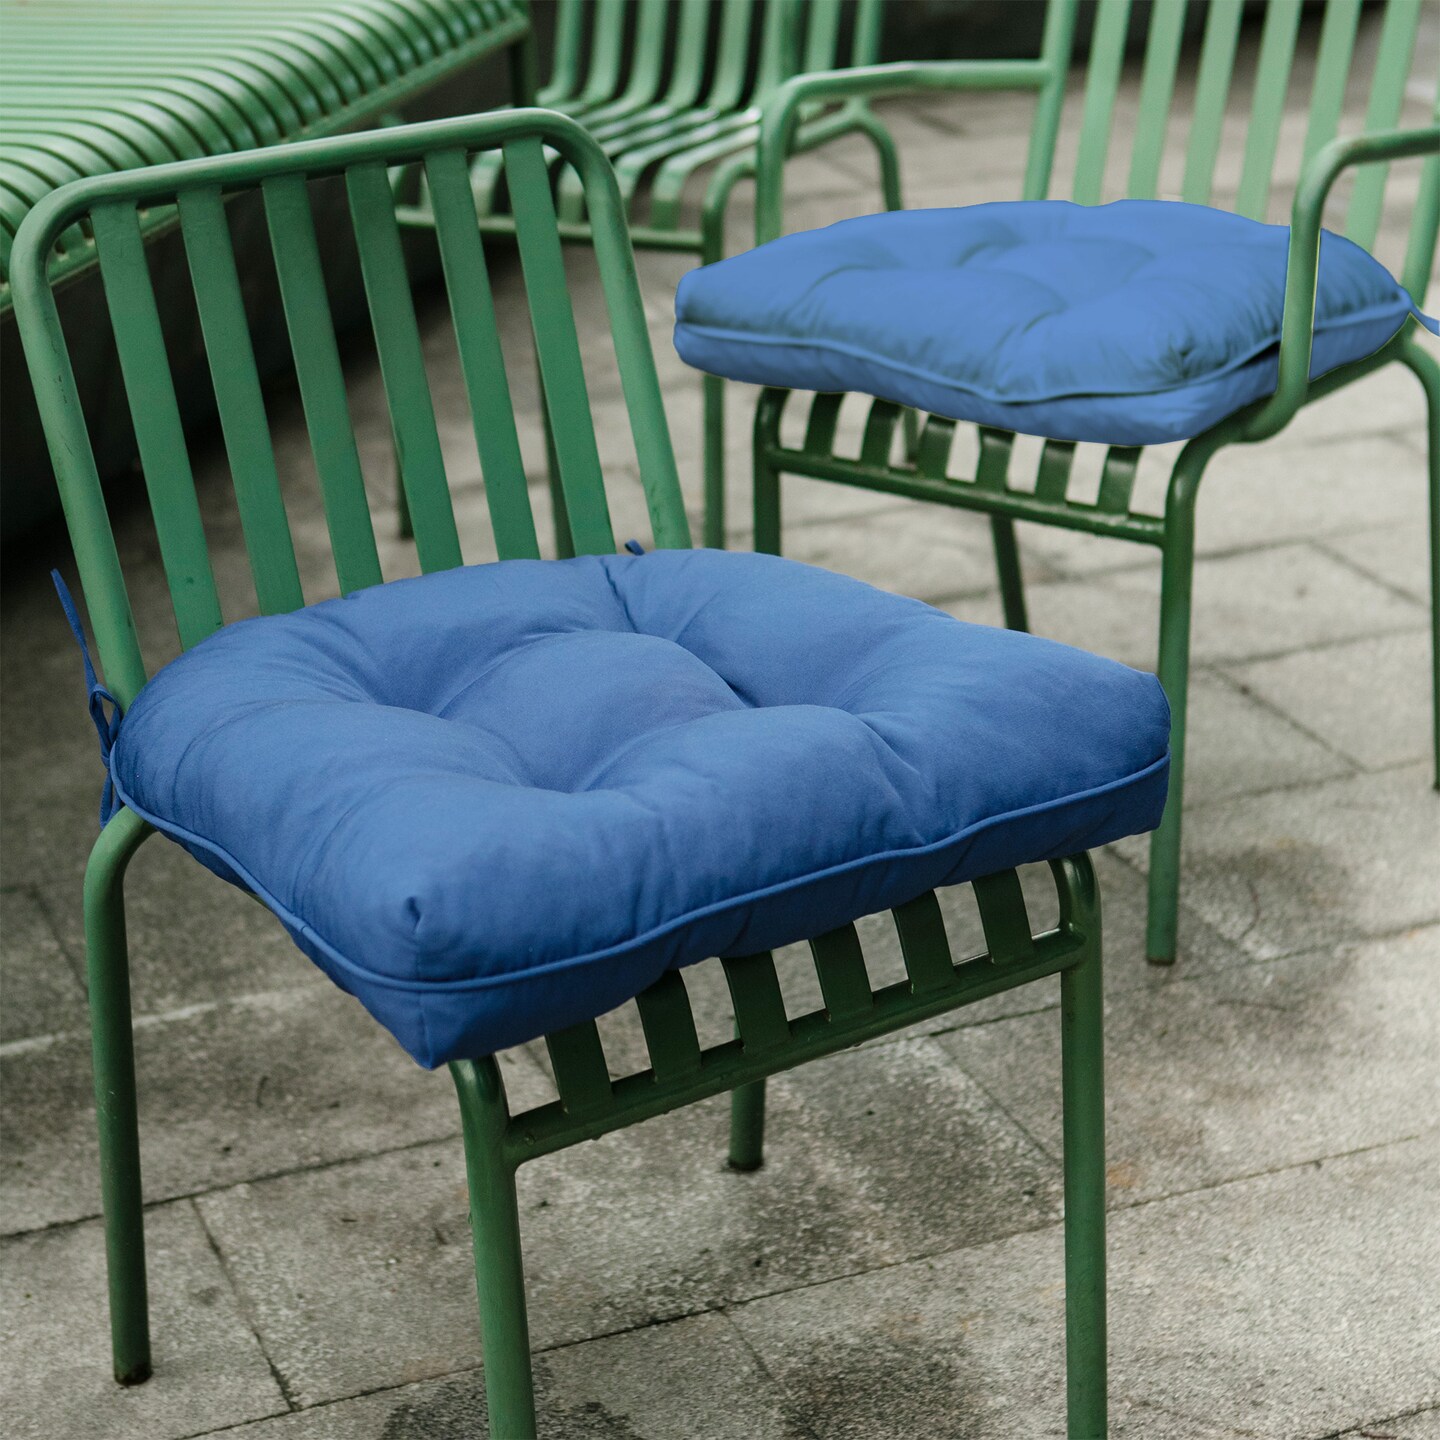 Peacenest Outdoor Patio Seat Cushion Set of 2-Waterproof Indoor Outdoor cushion